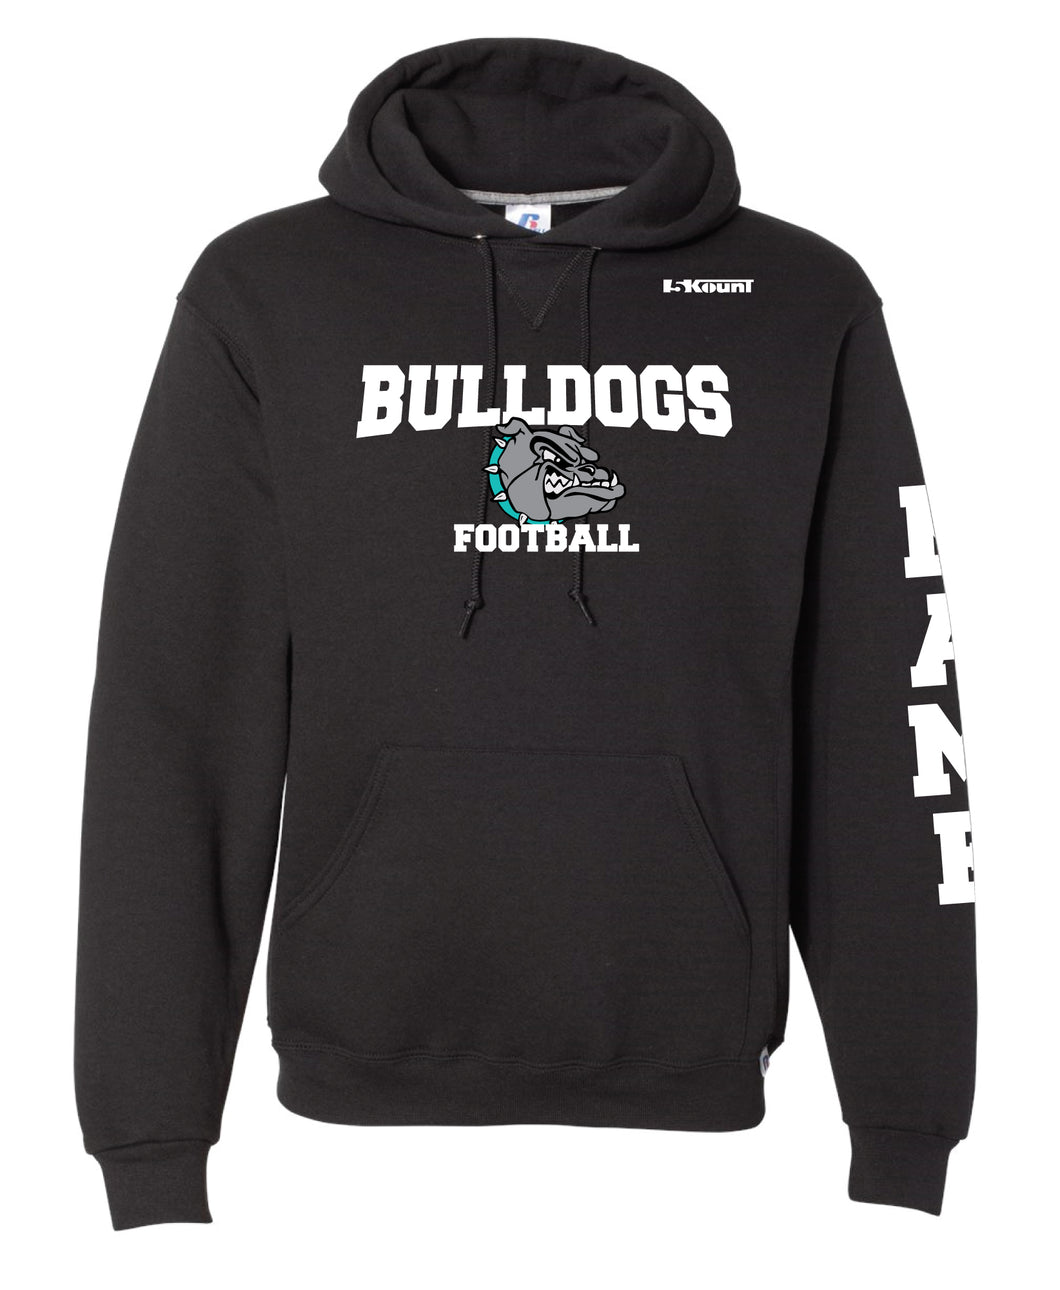 Moyock Bulldogs Football Russell Athletic Cotton Hoodie - Black - 5KounT2018